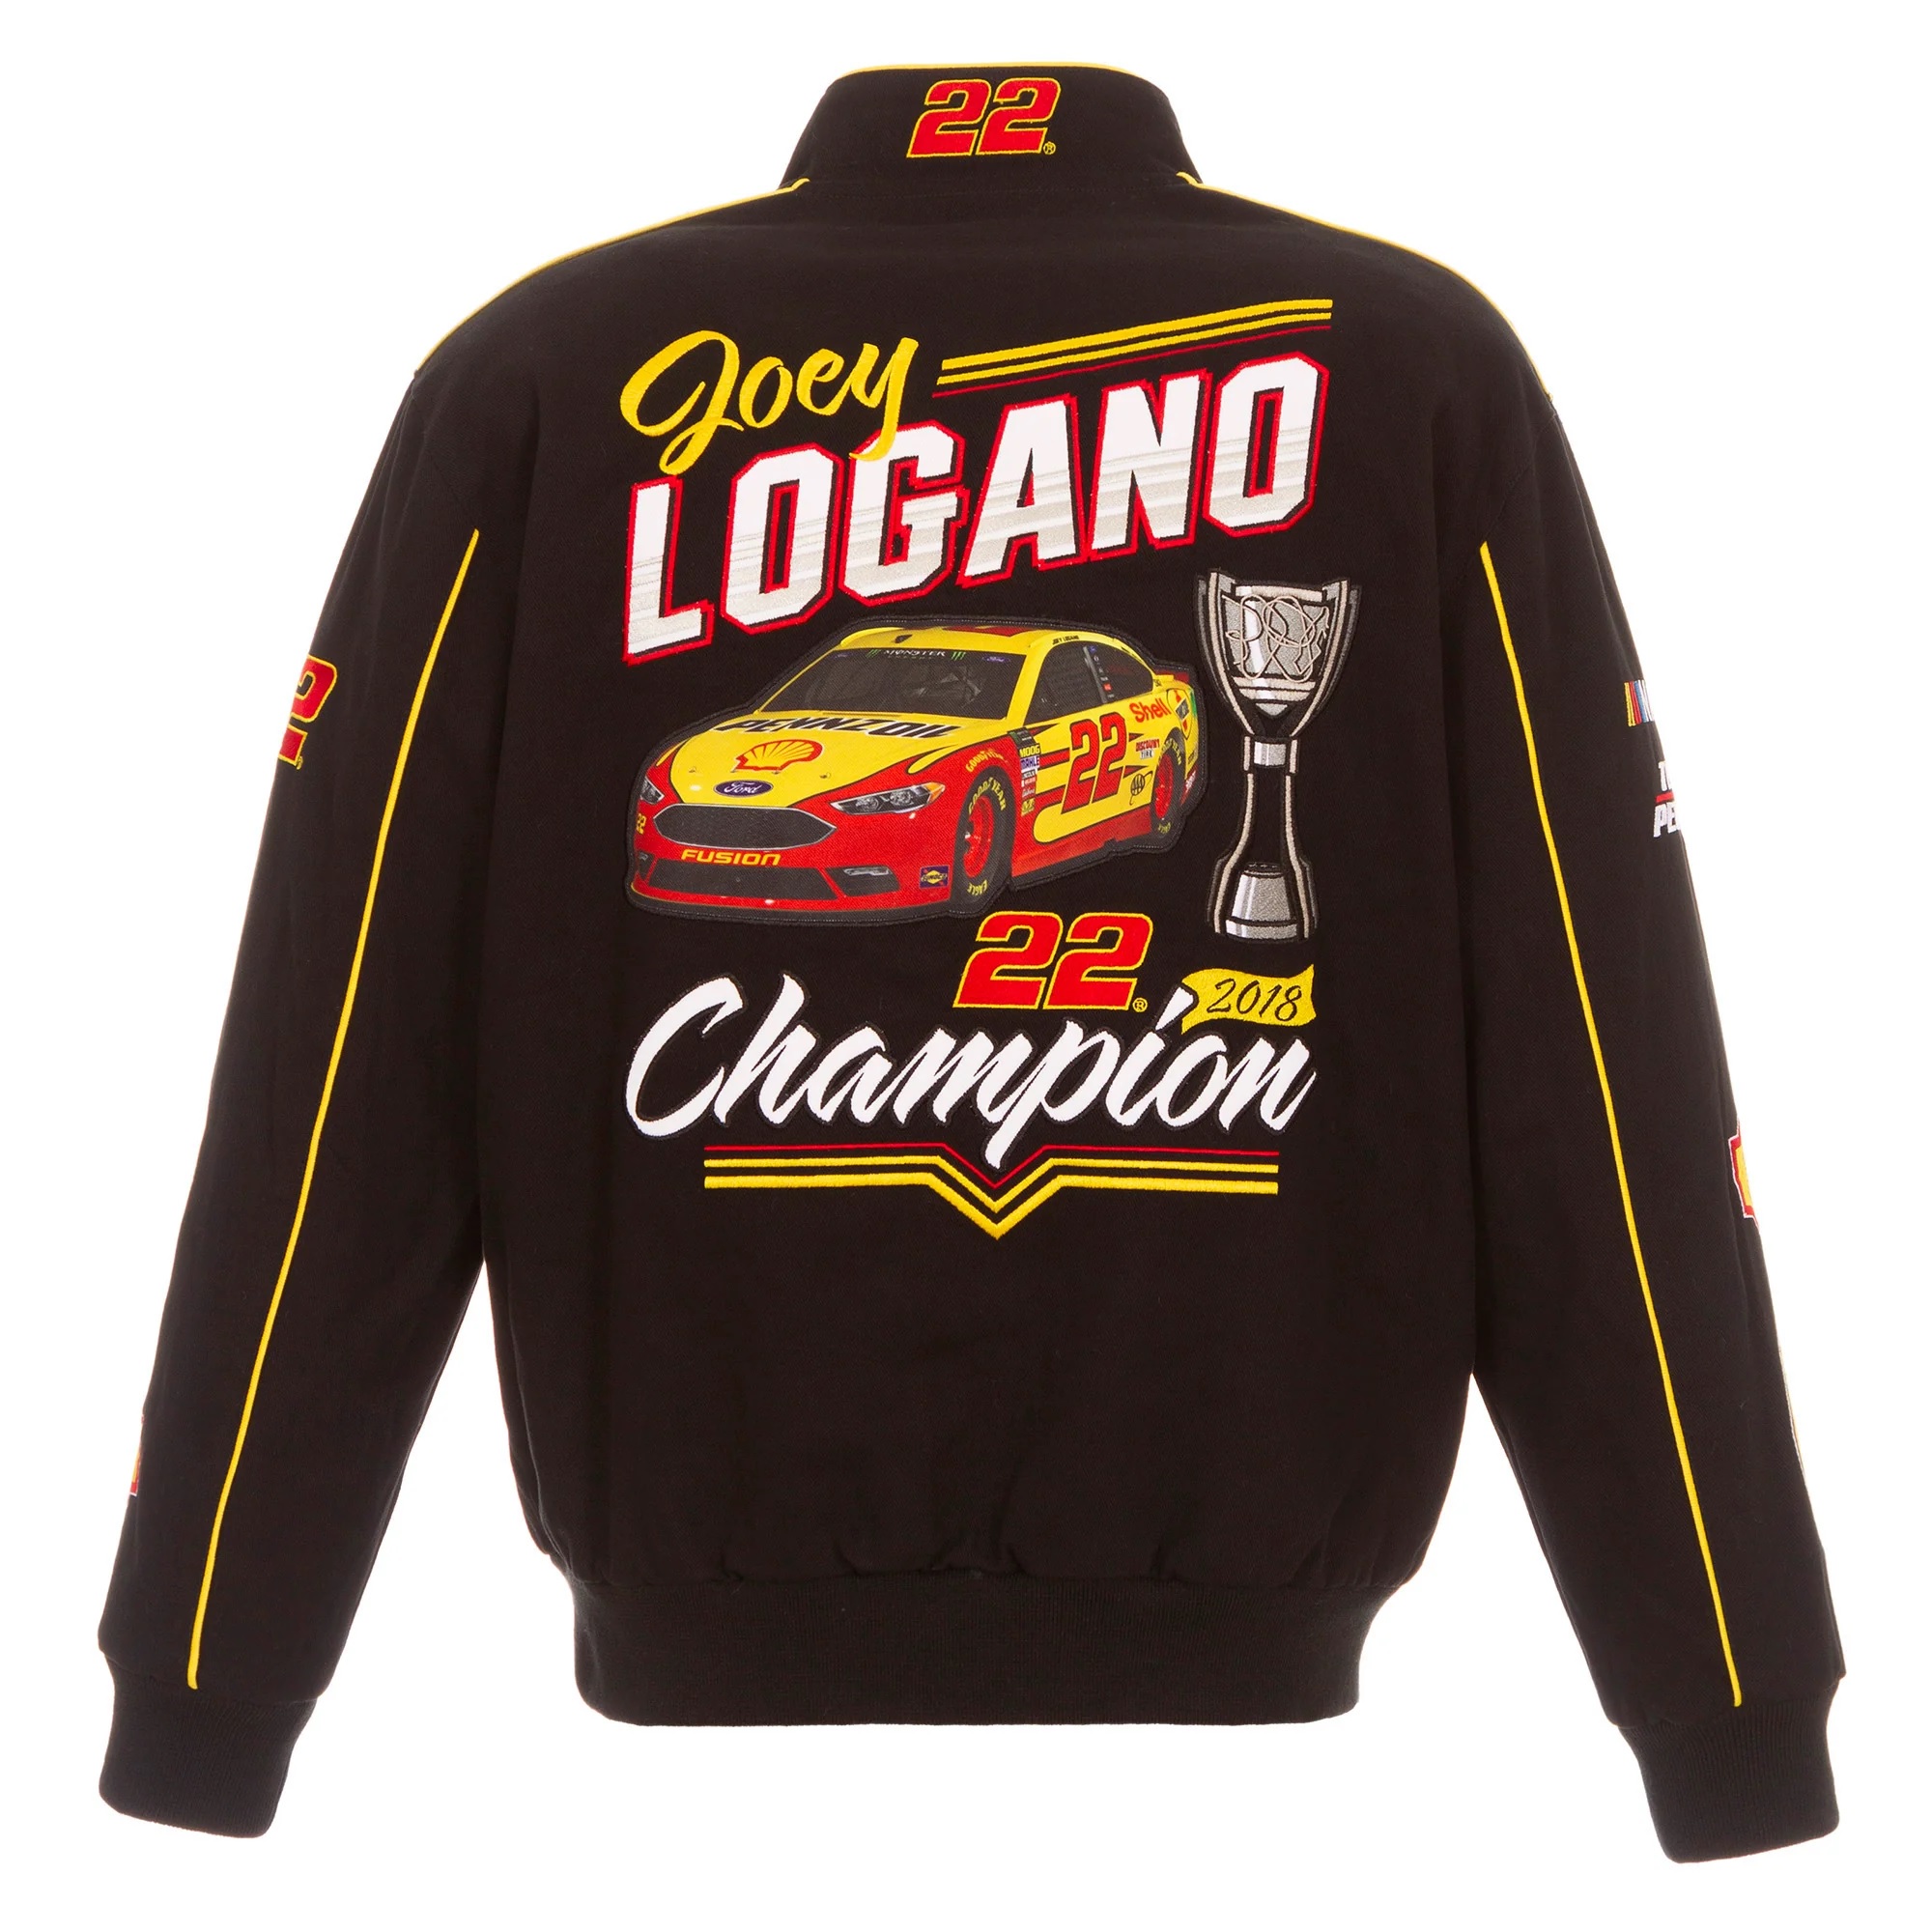 Joey Logano NASCAR Cup Series Champion Twill Jacket